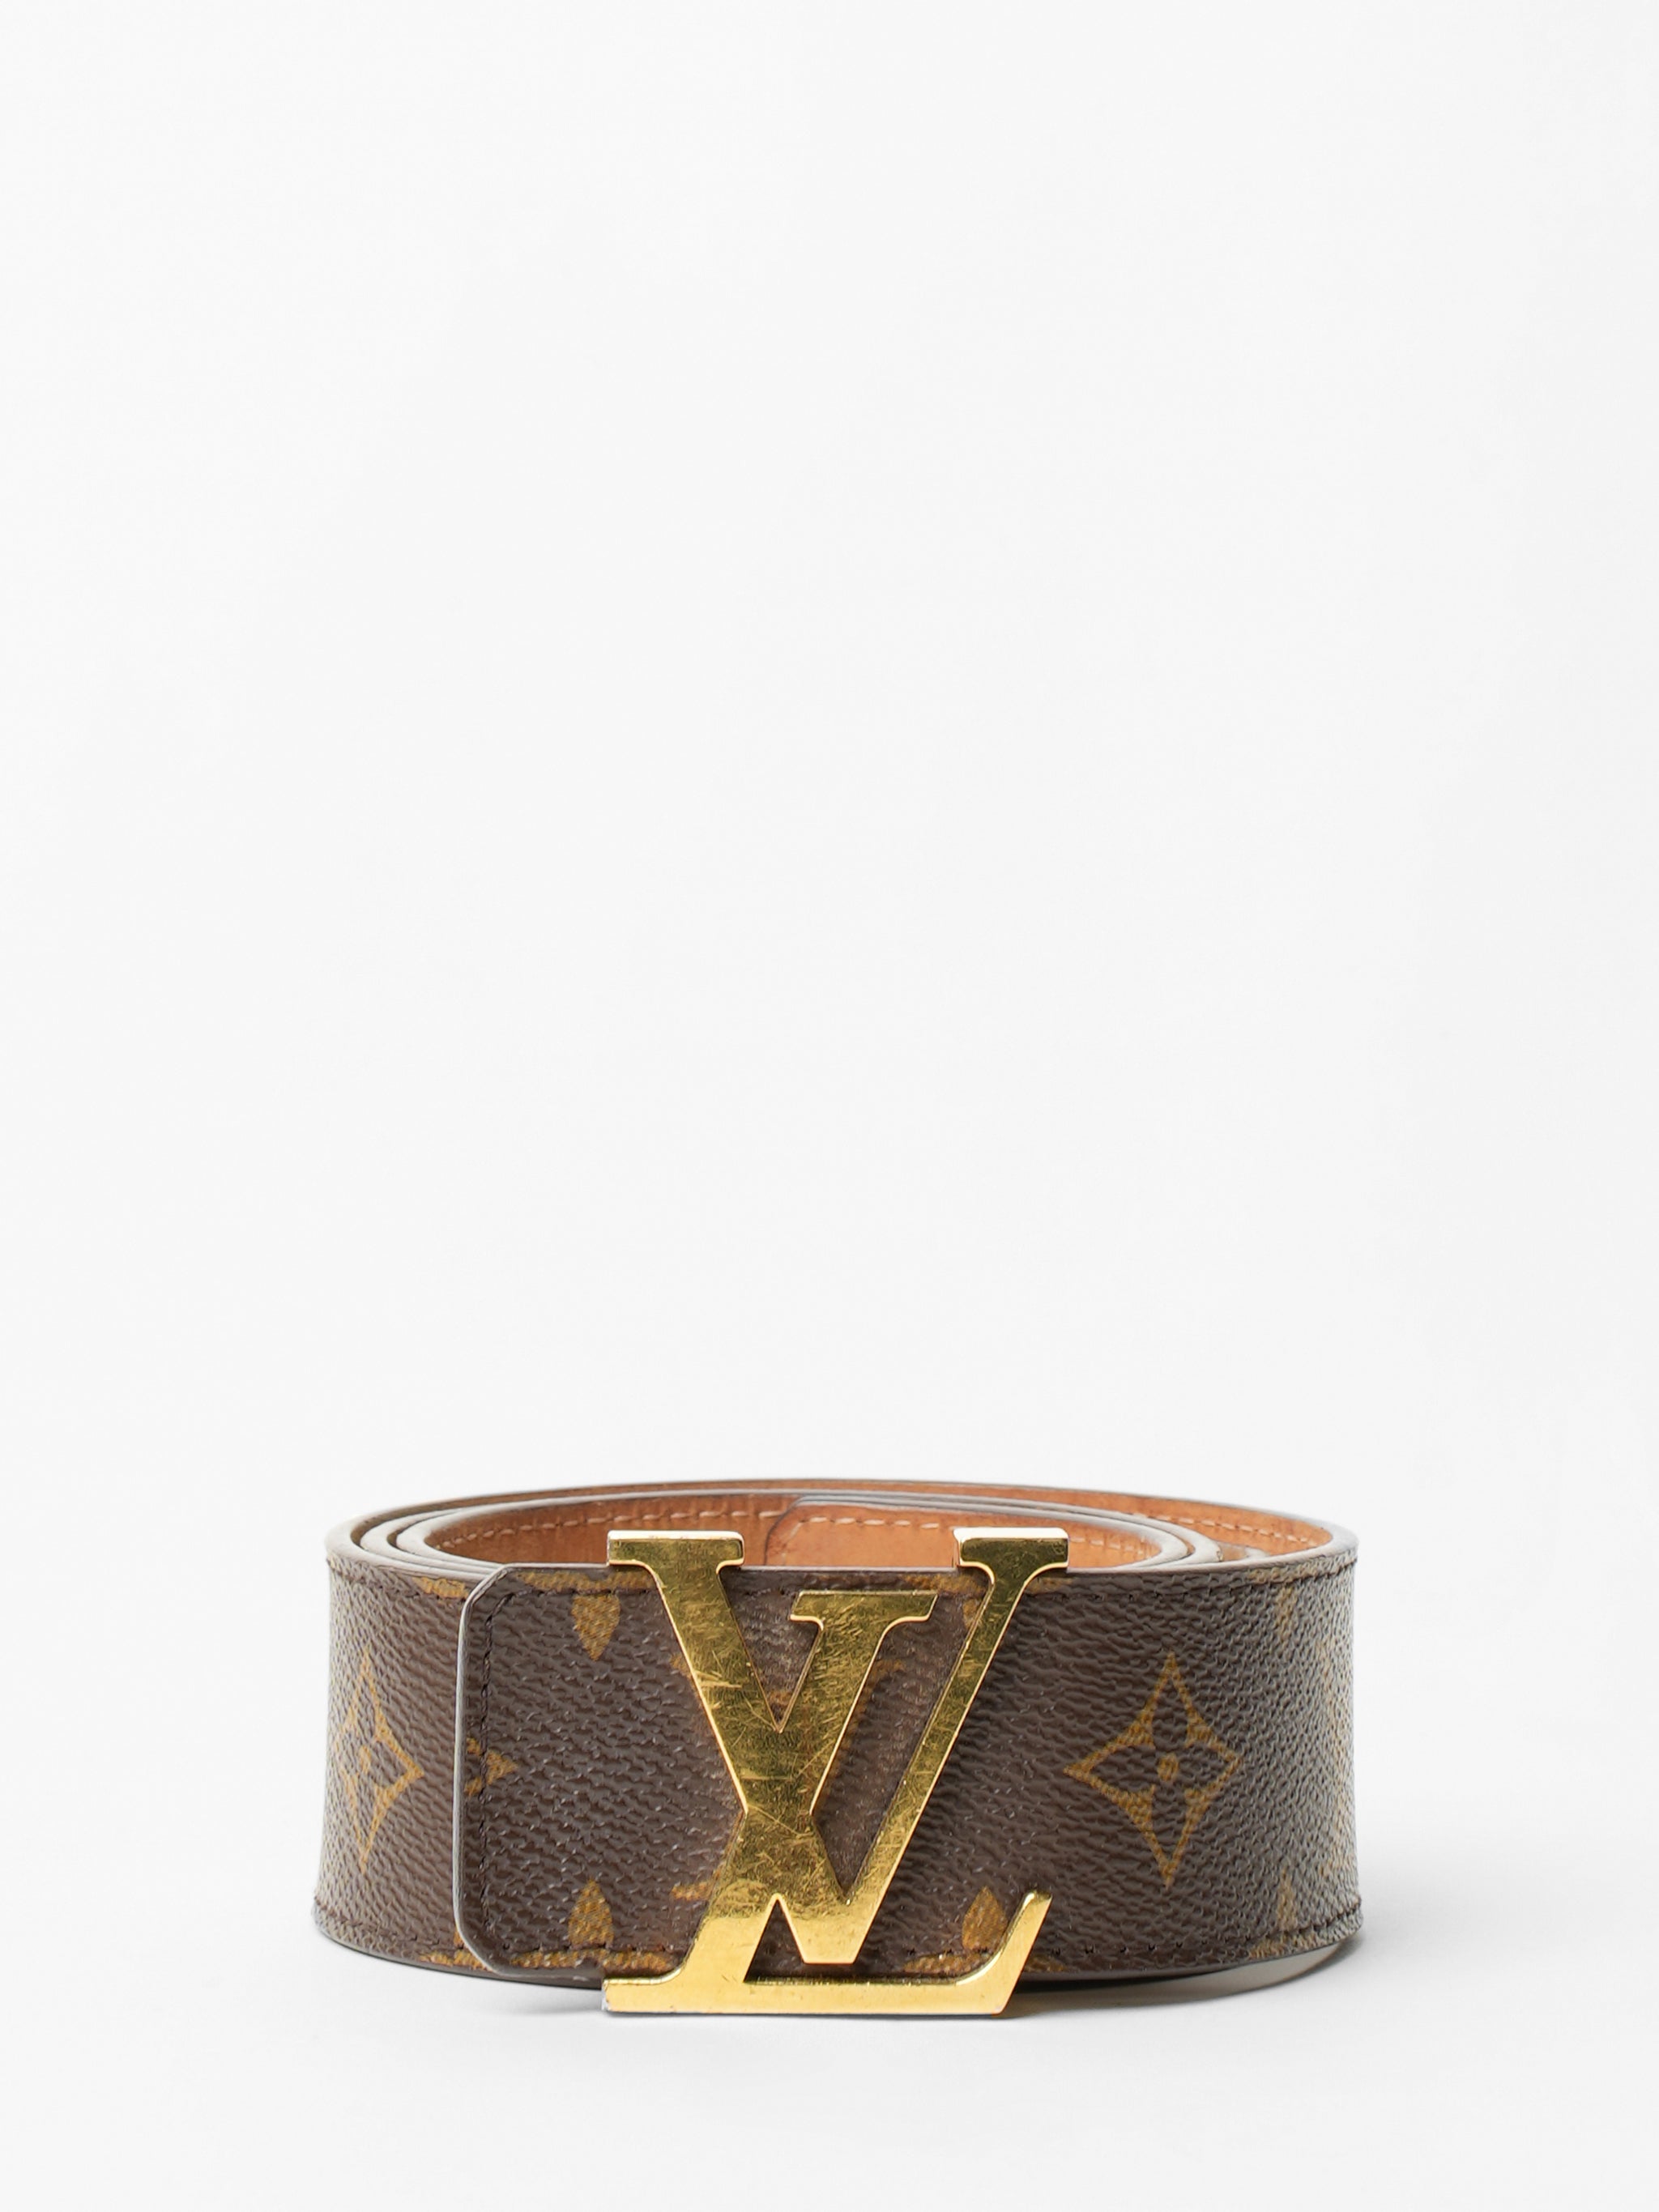 Louis Vuitton Monogram Belt In Men's Belts for sale